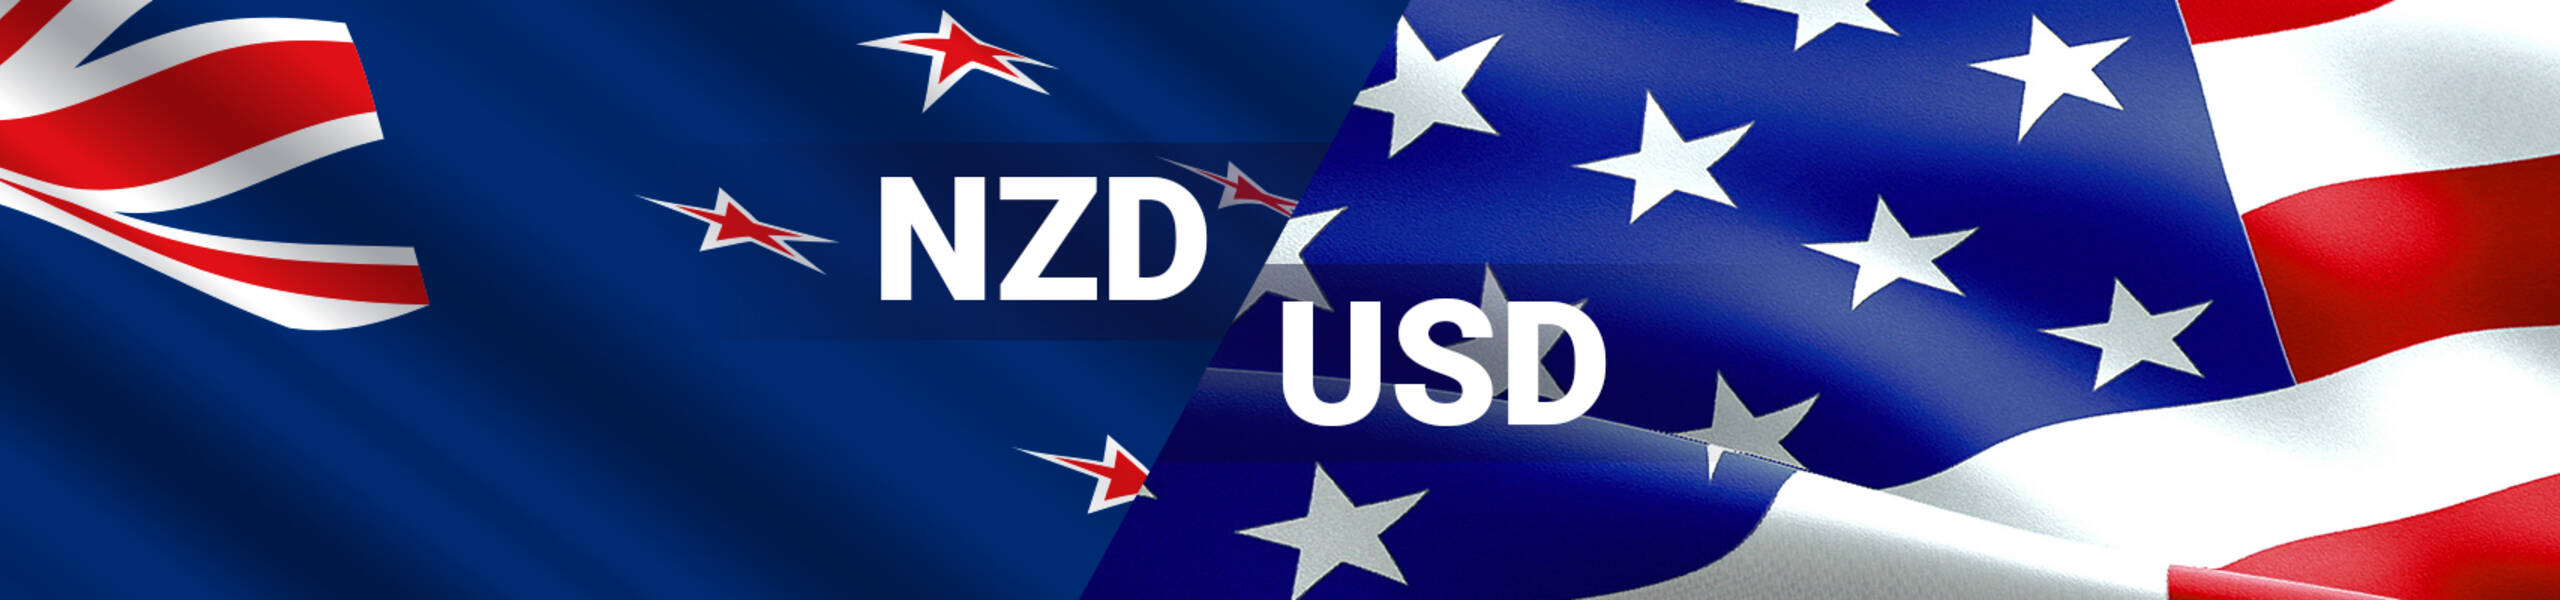 NZD/USD broke pivotal support level 0.7140